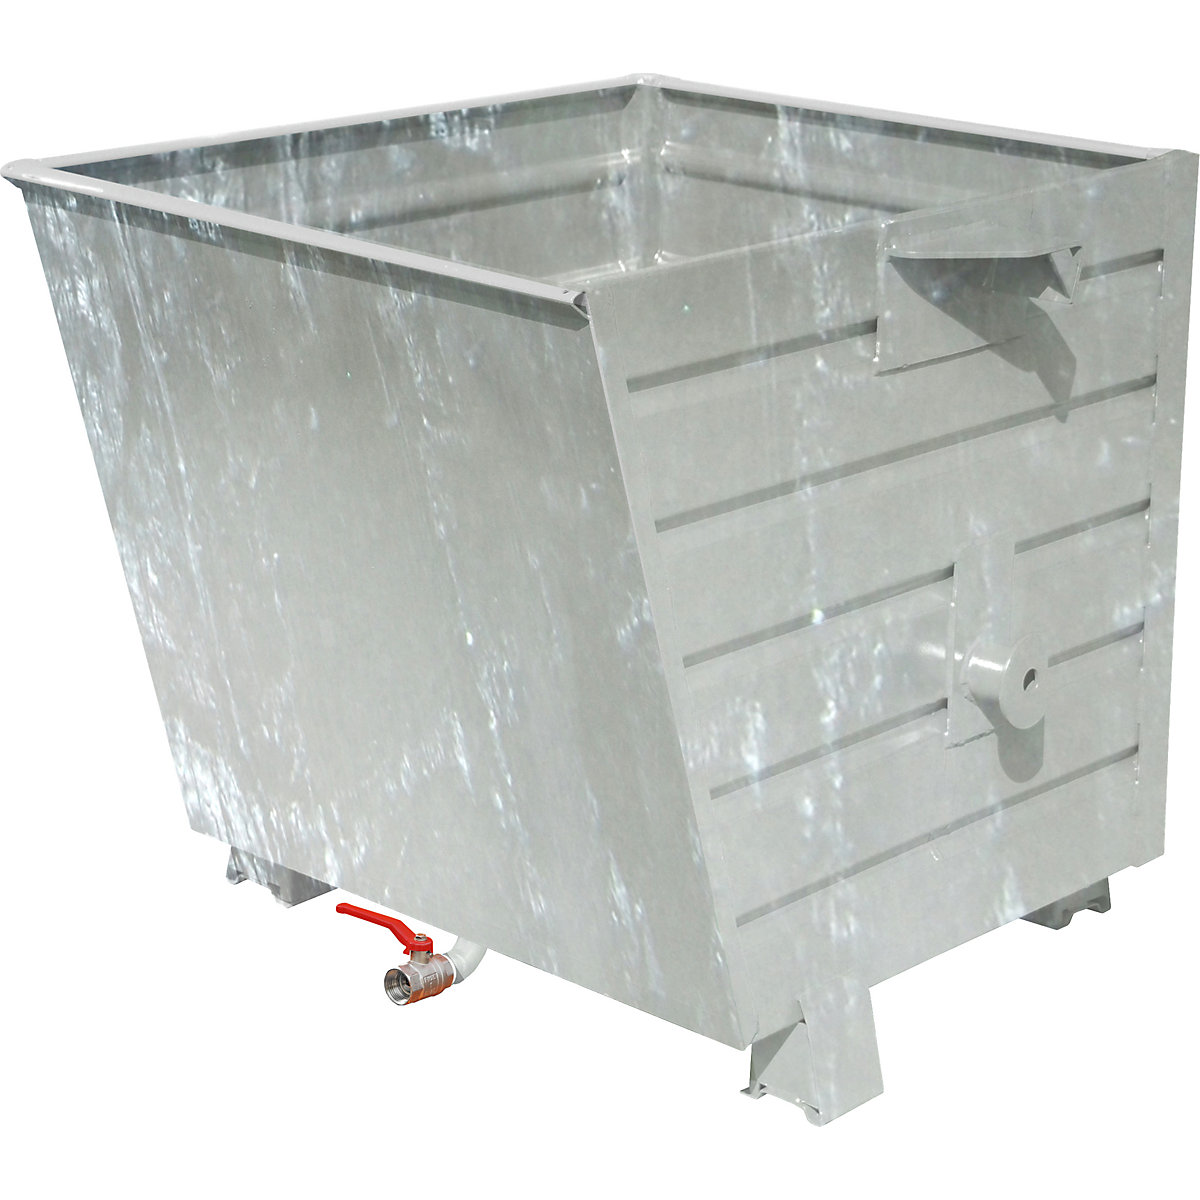 EUROKRAFTpro – Container basculant și stivuibil pentru șpan BSS, volum 0,55 m³, zincat la cald